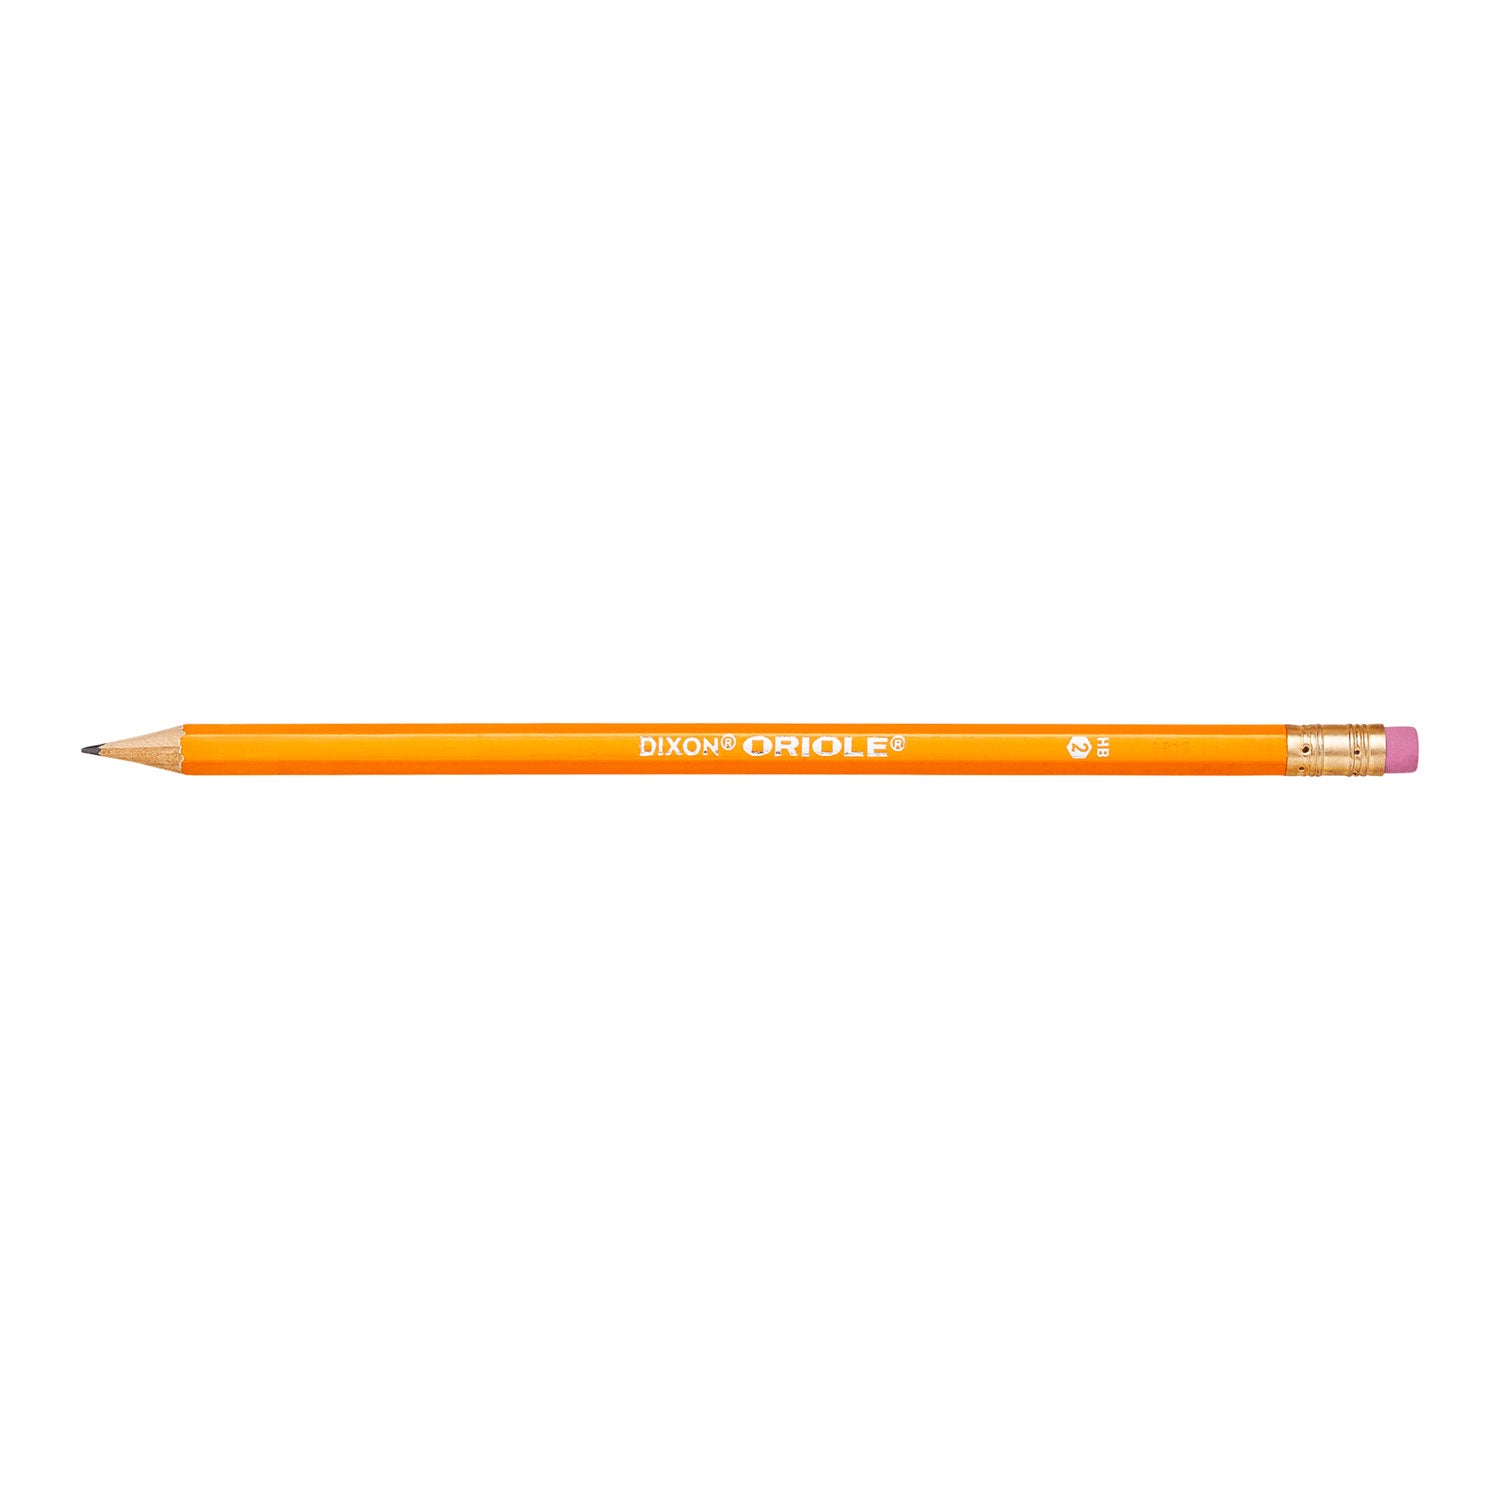 oriole-presharpened-pencils-hb-#2-black-lead-yellow-barrel-144-pack_dixx12866x - 1